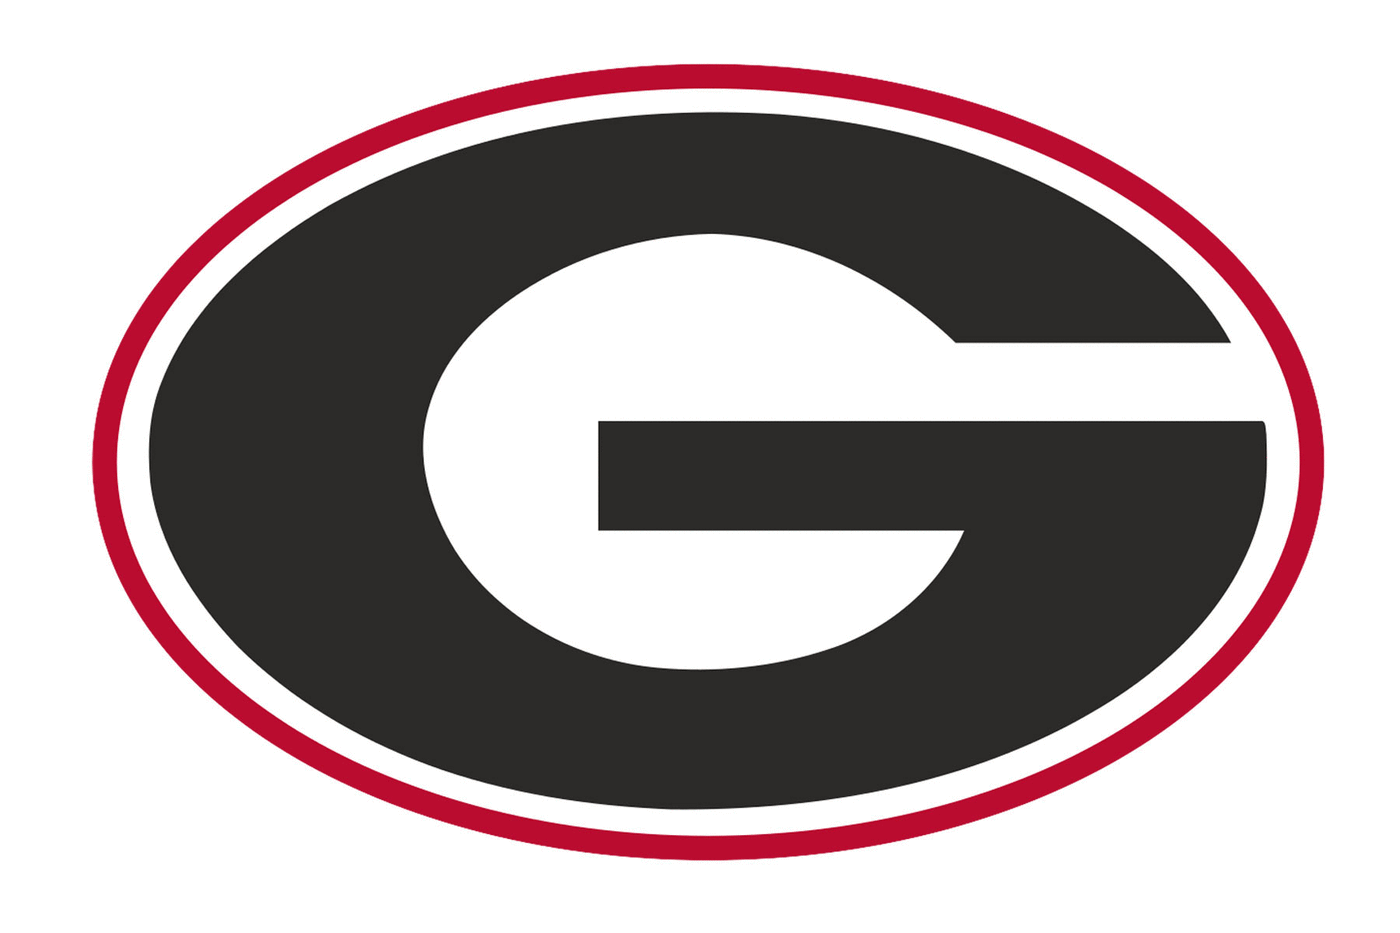 Georgia Bulldogs Football Helmet